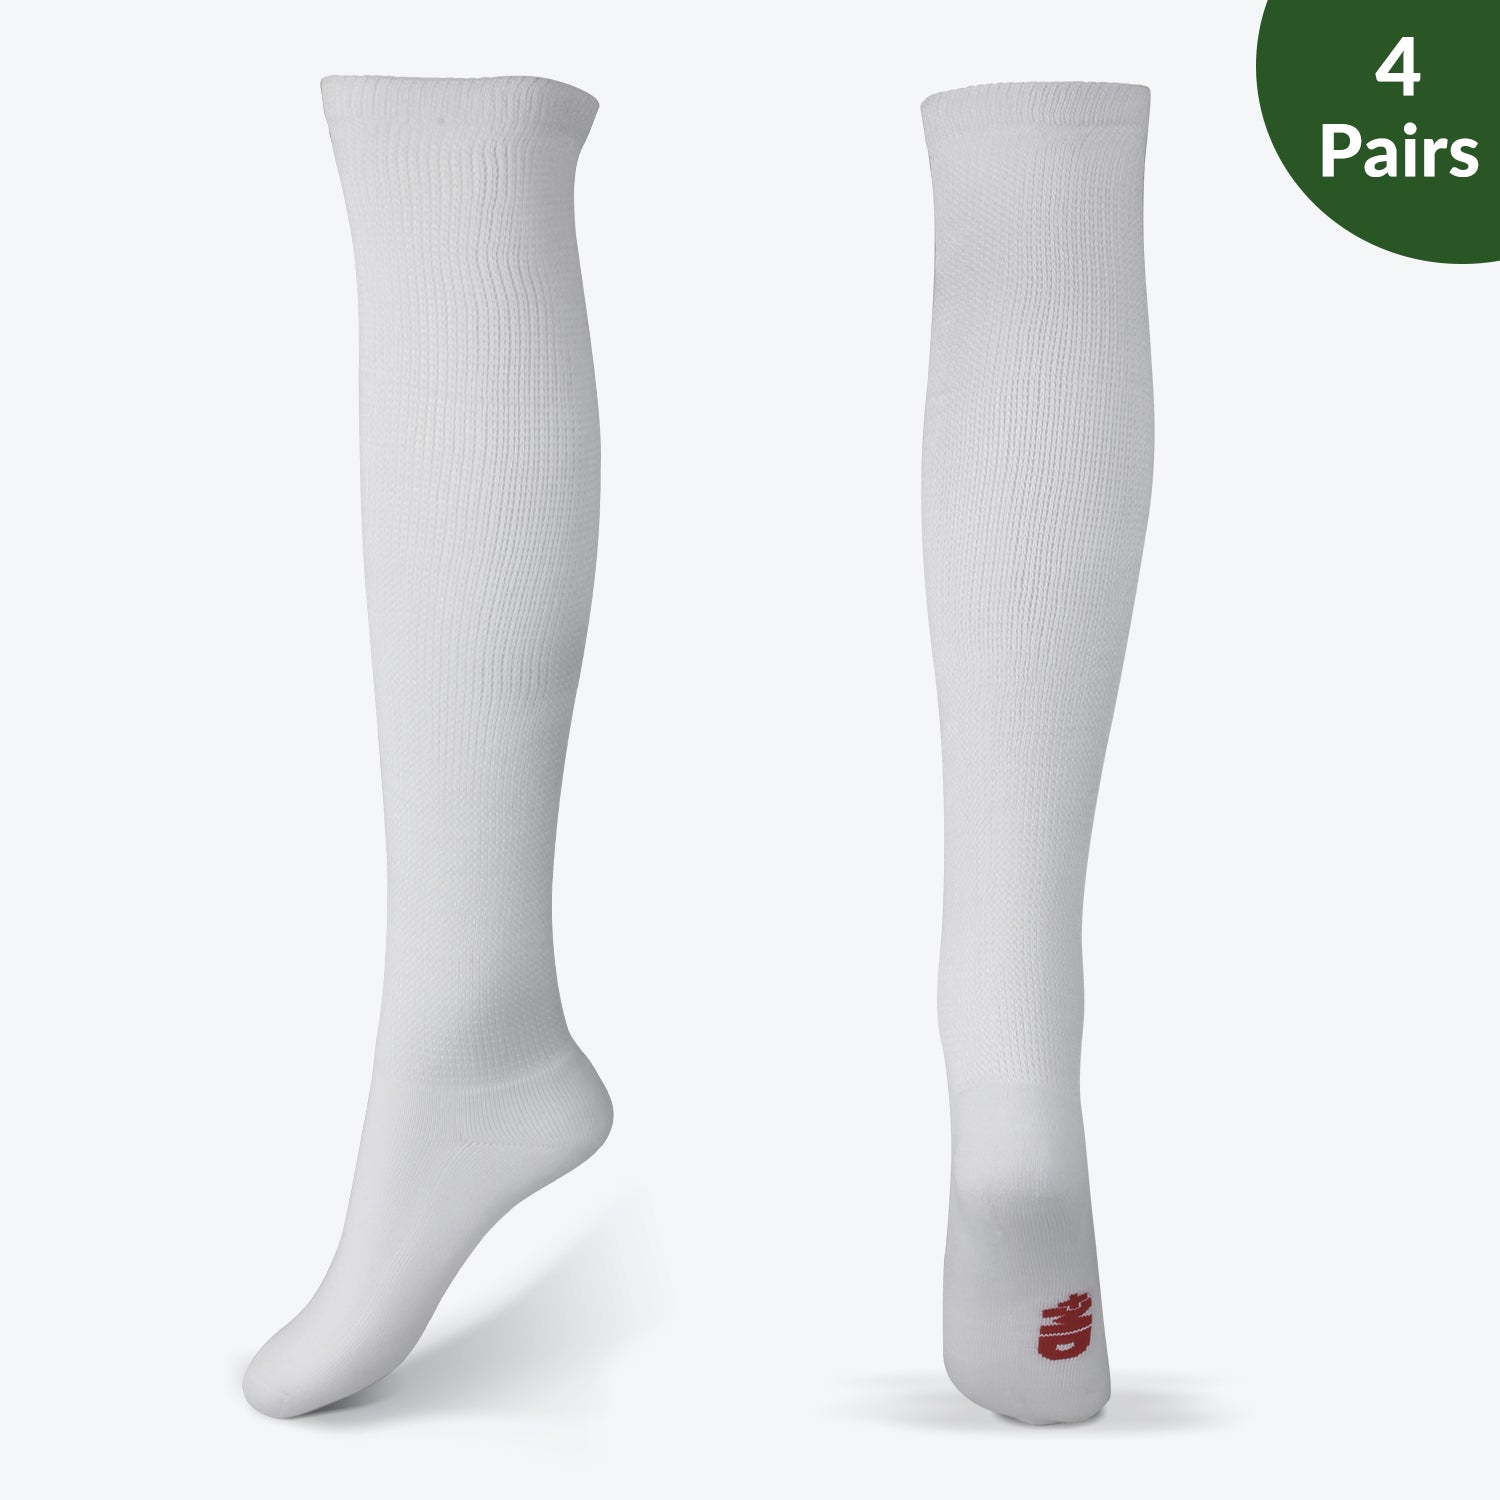 Extra wide non-binding Bamboo Knee high socks, seamless toe, long circulatory design with Warm cushion sole, 4 pairs